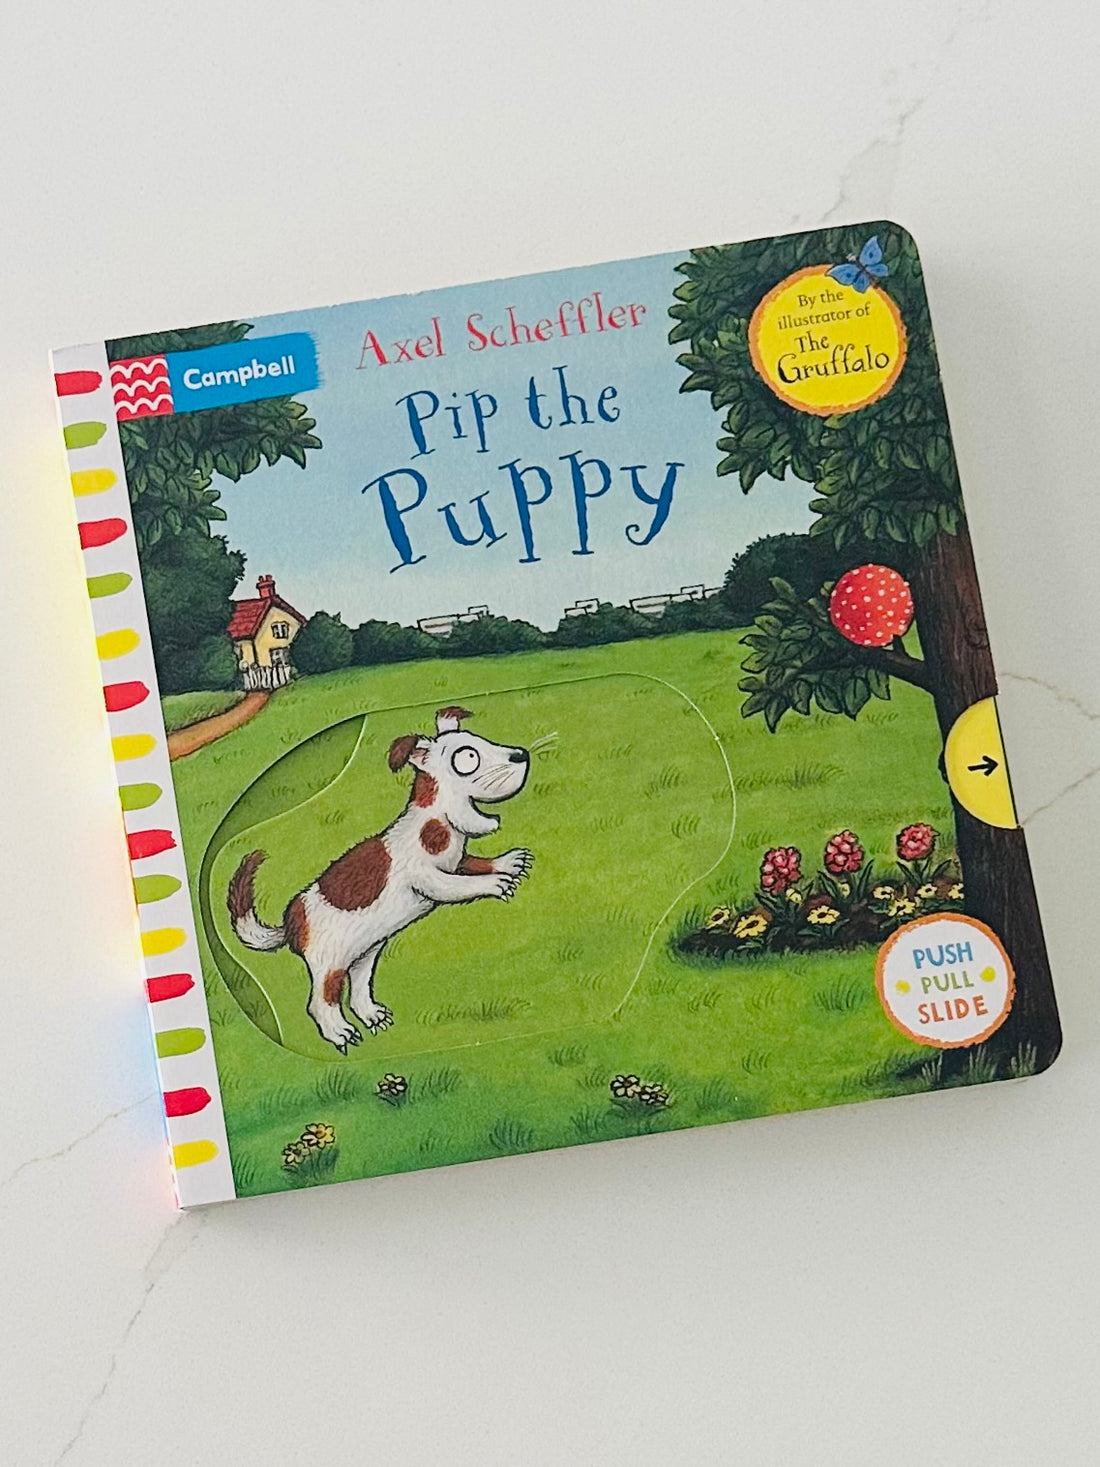 Pip the Puppy: Buku Tolak, Tarik, Slaid oleh Axel Scheffler